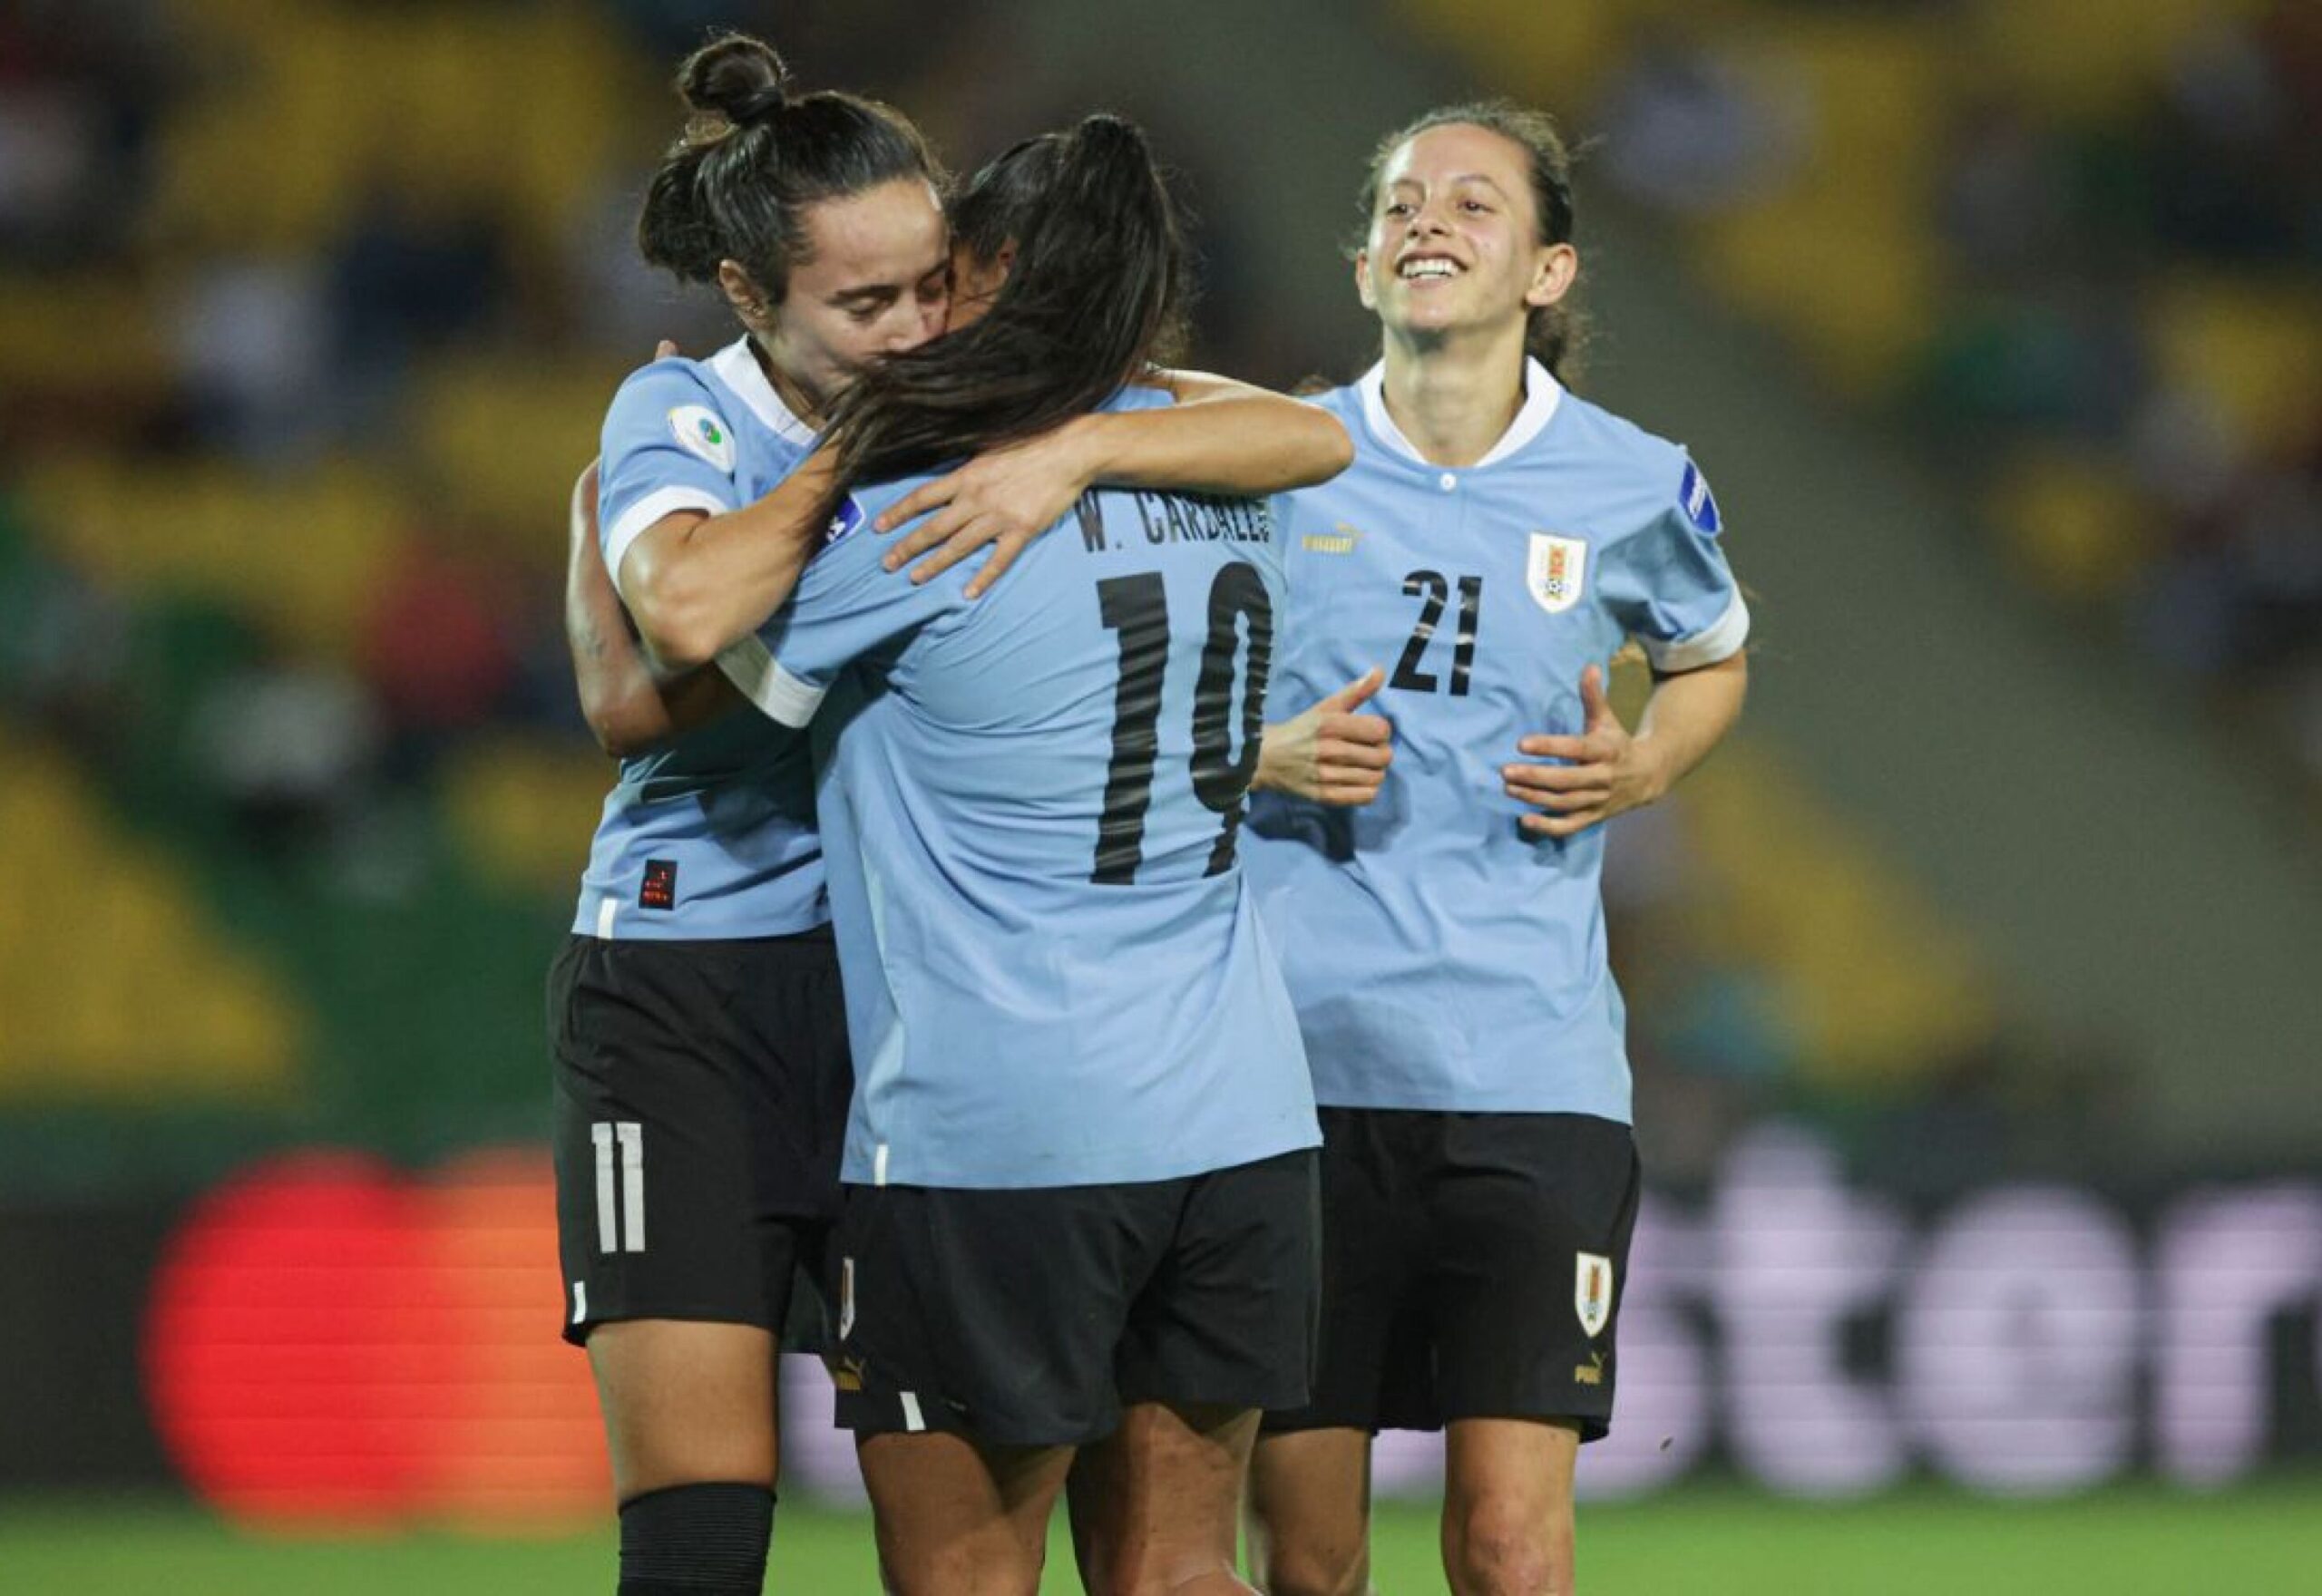 Futbol Femenino en Uruguay - Futbol Femenino en Uruguay